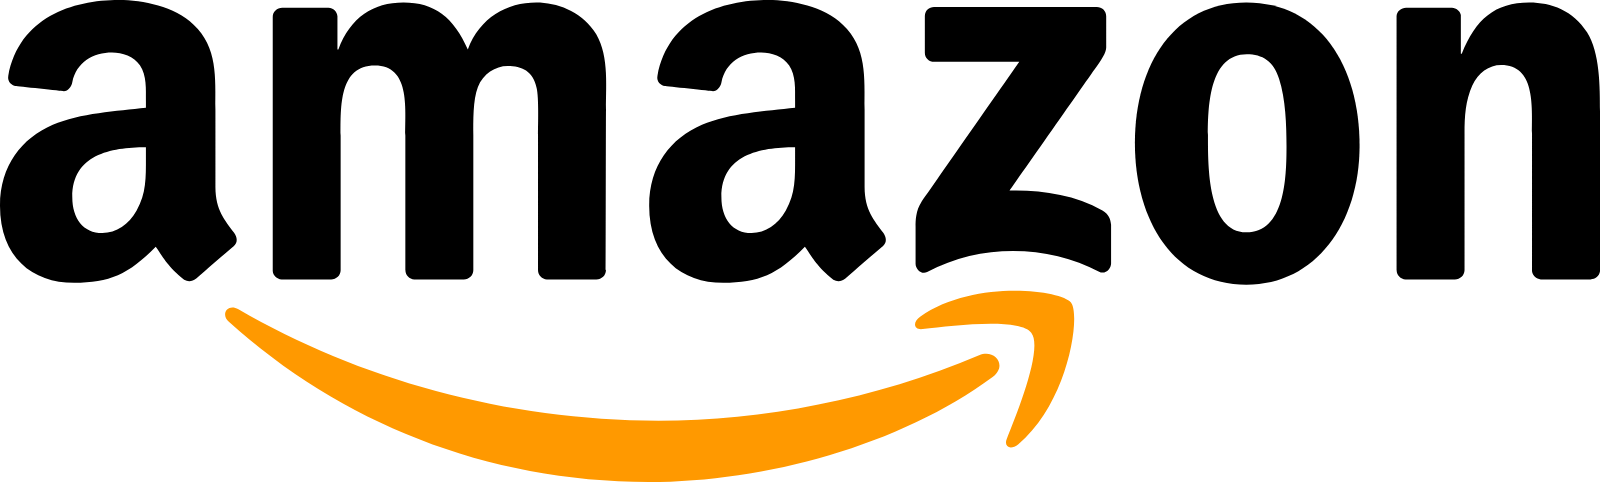 Amazon it companies in London